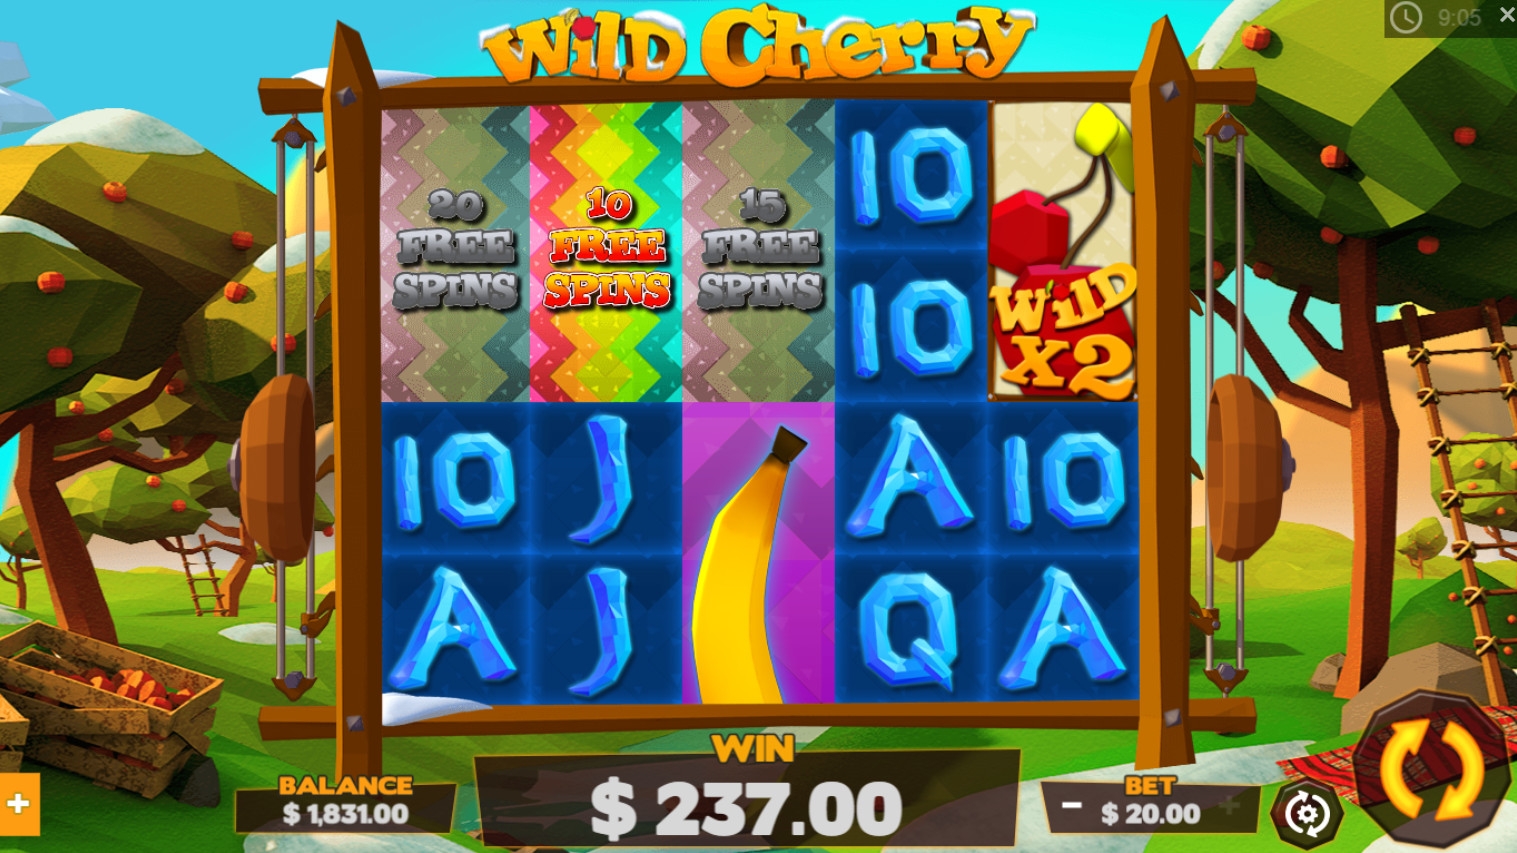 Wild Cherry (Wild Cherry) from category Slots